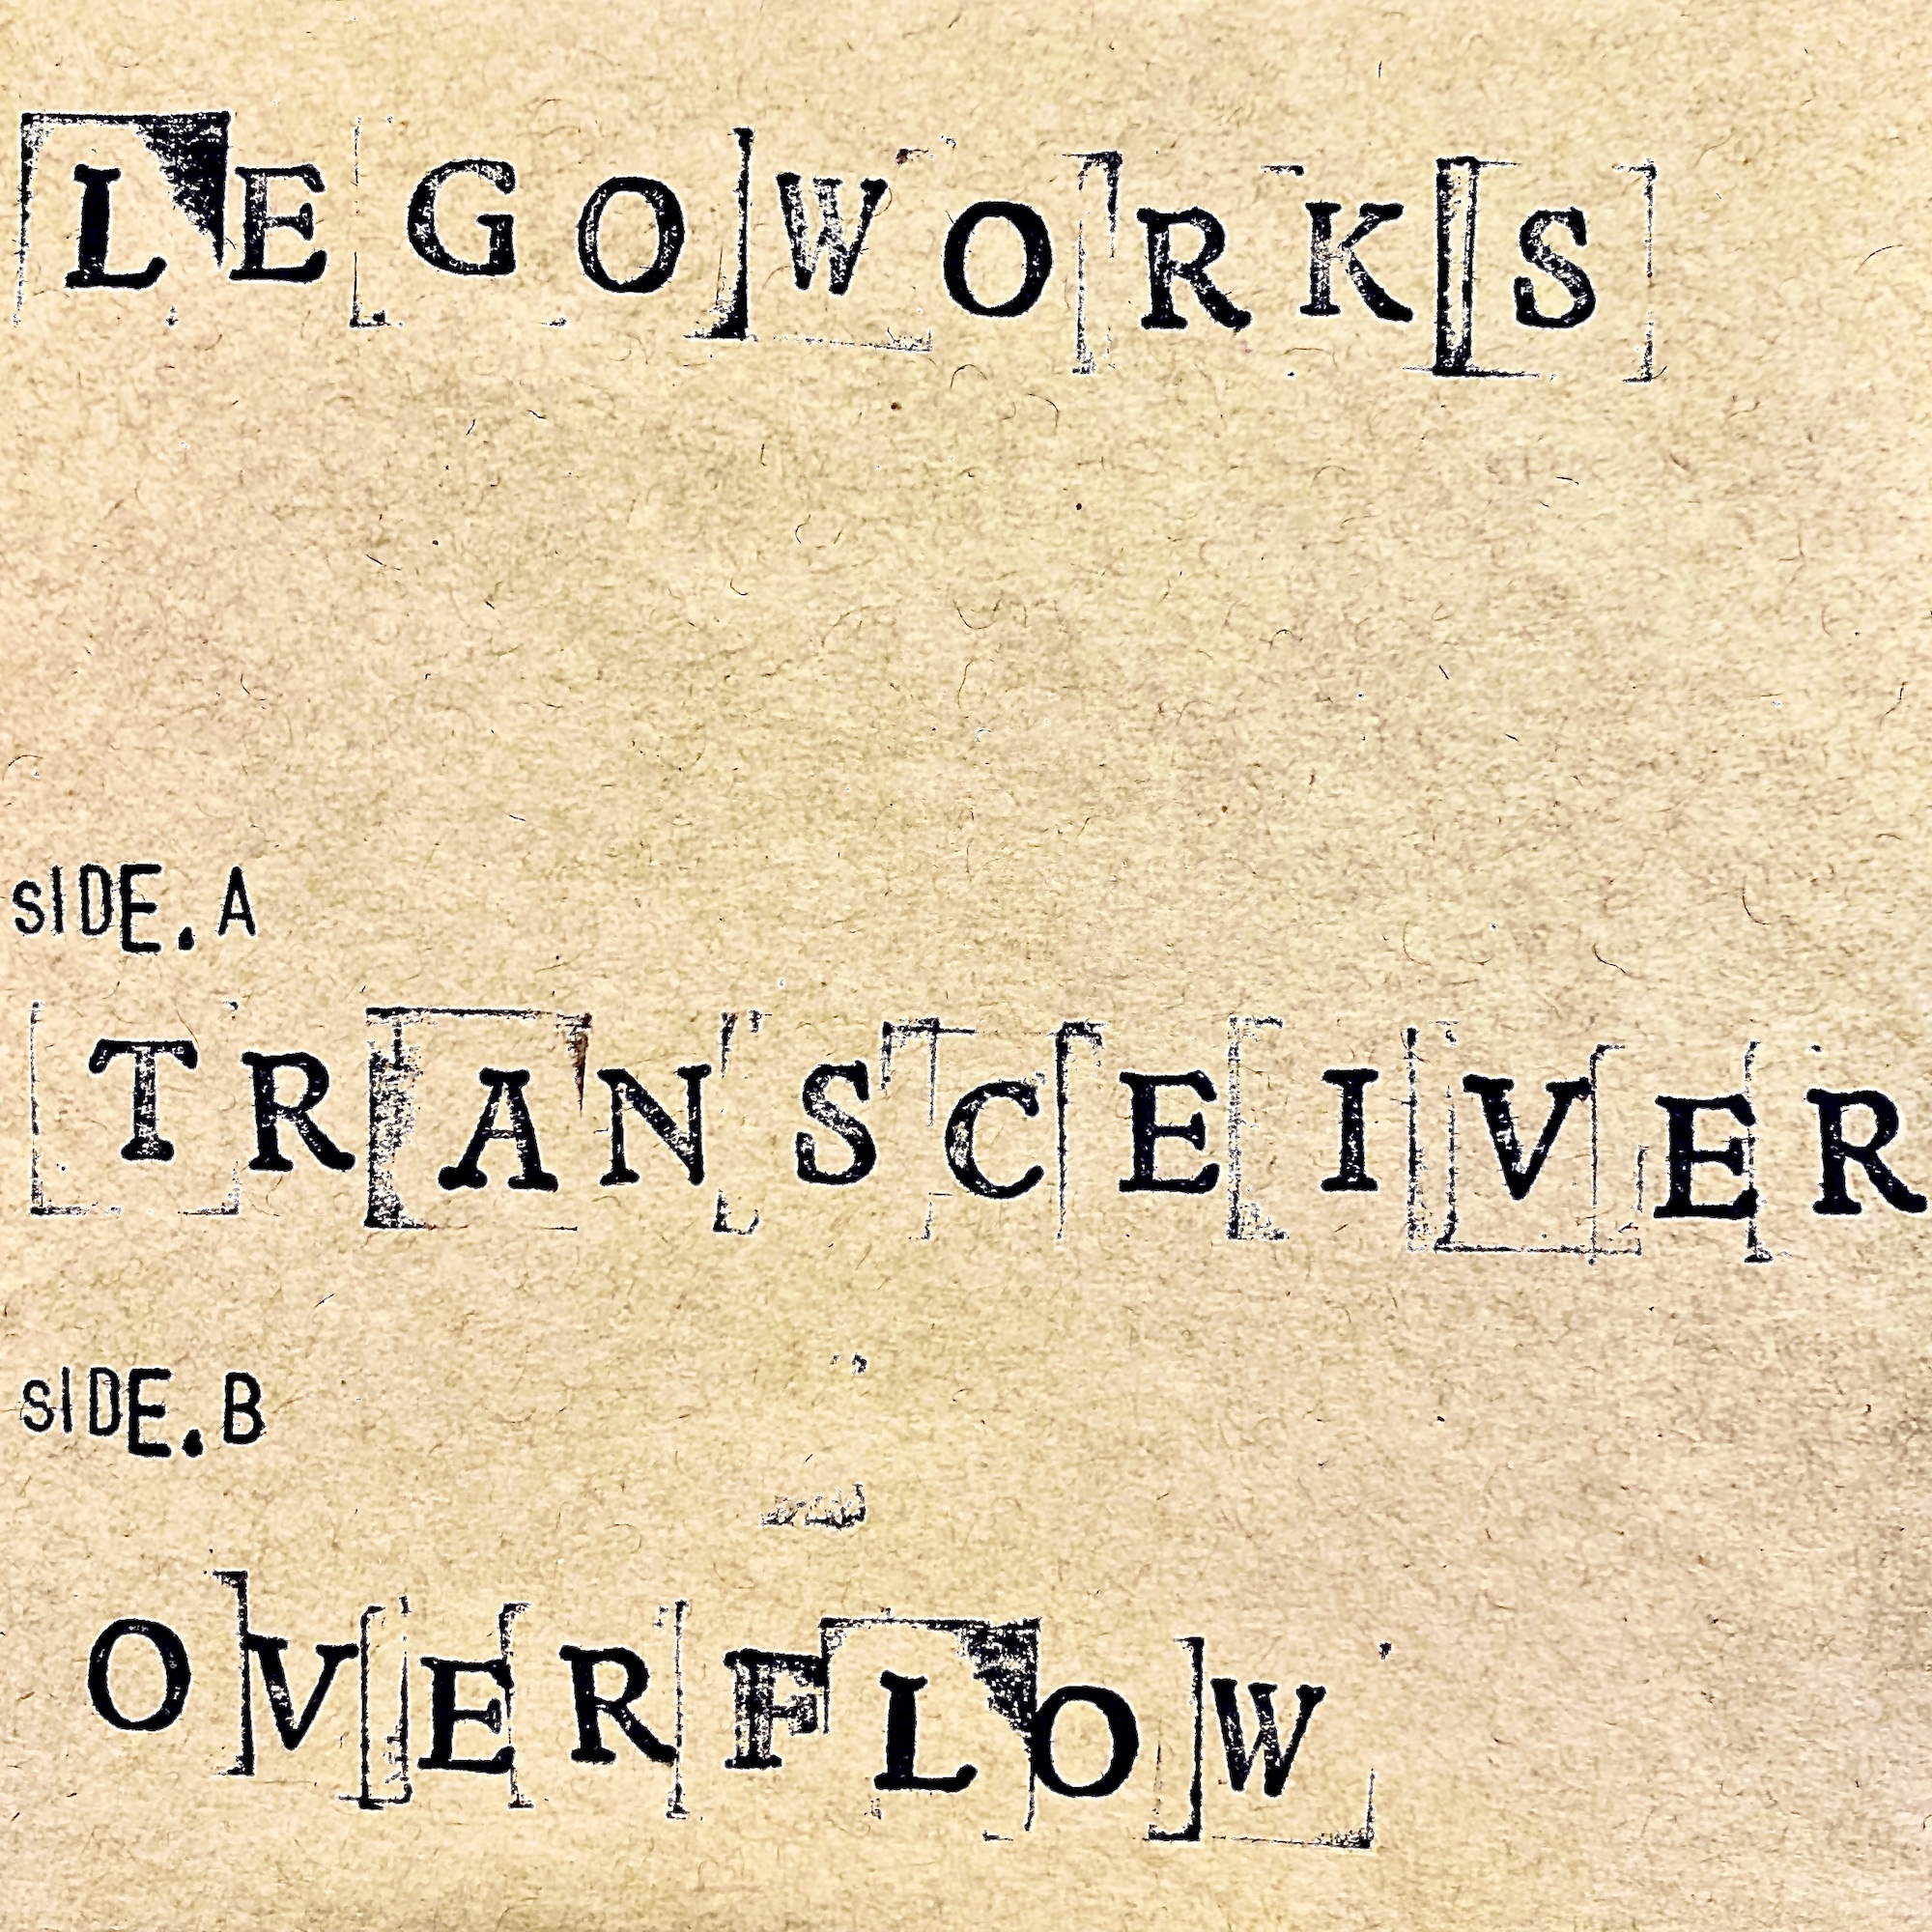 Transceiver / Overflow